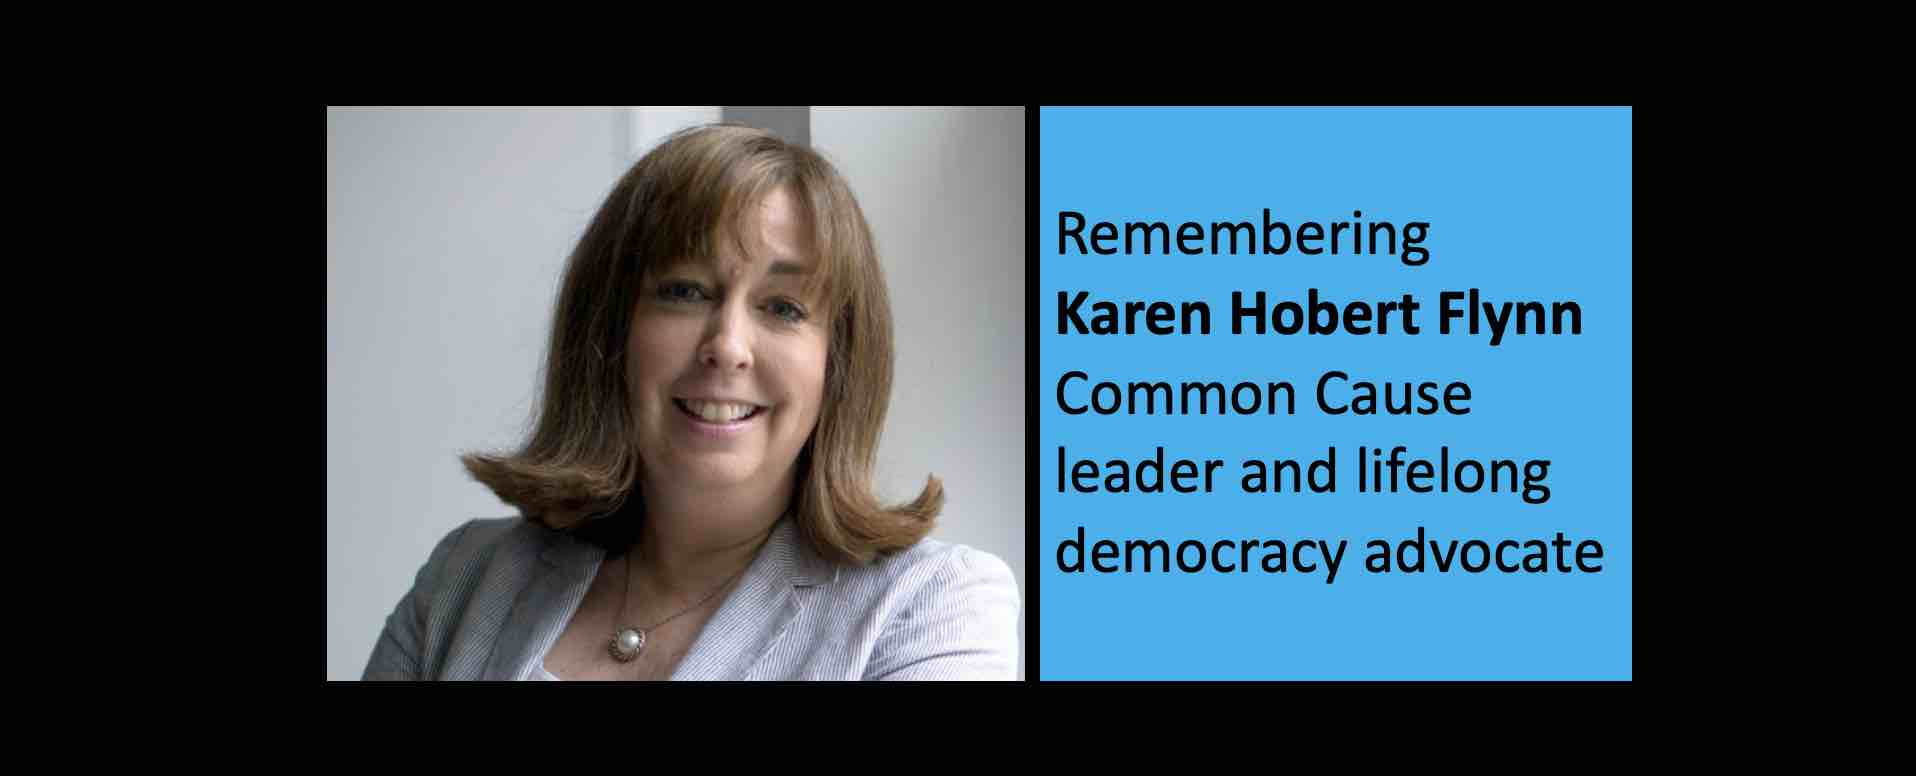 Remembering Karen Hobert Flynn, President of Common Cause and lifelong democracy advocate